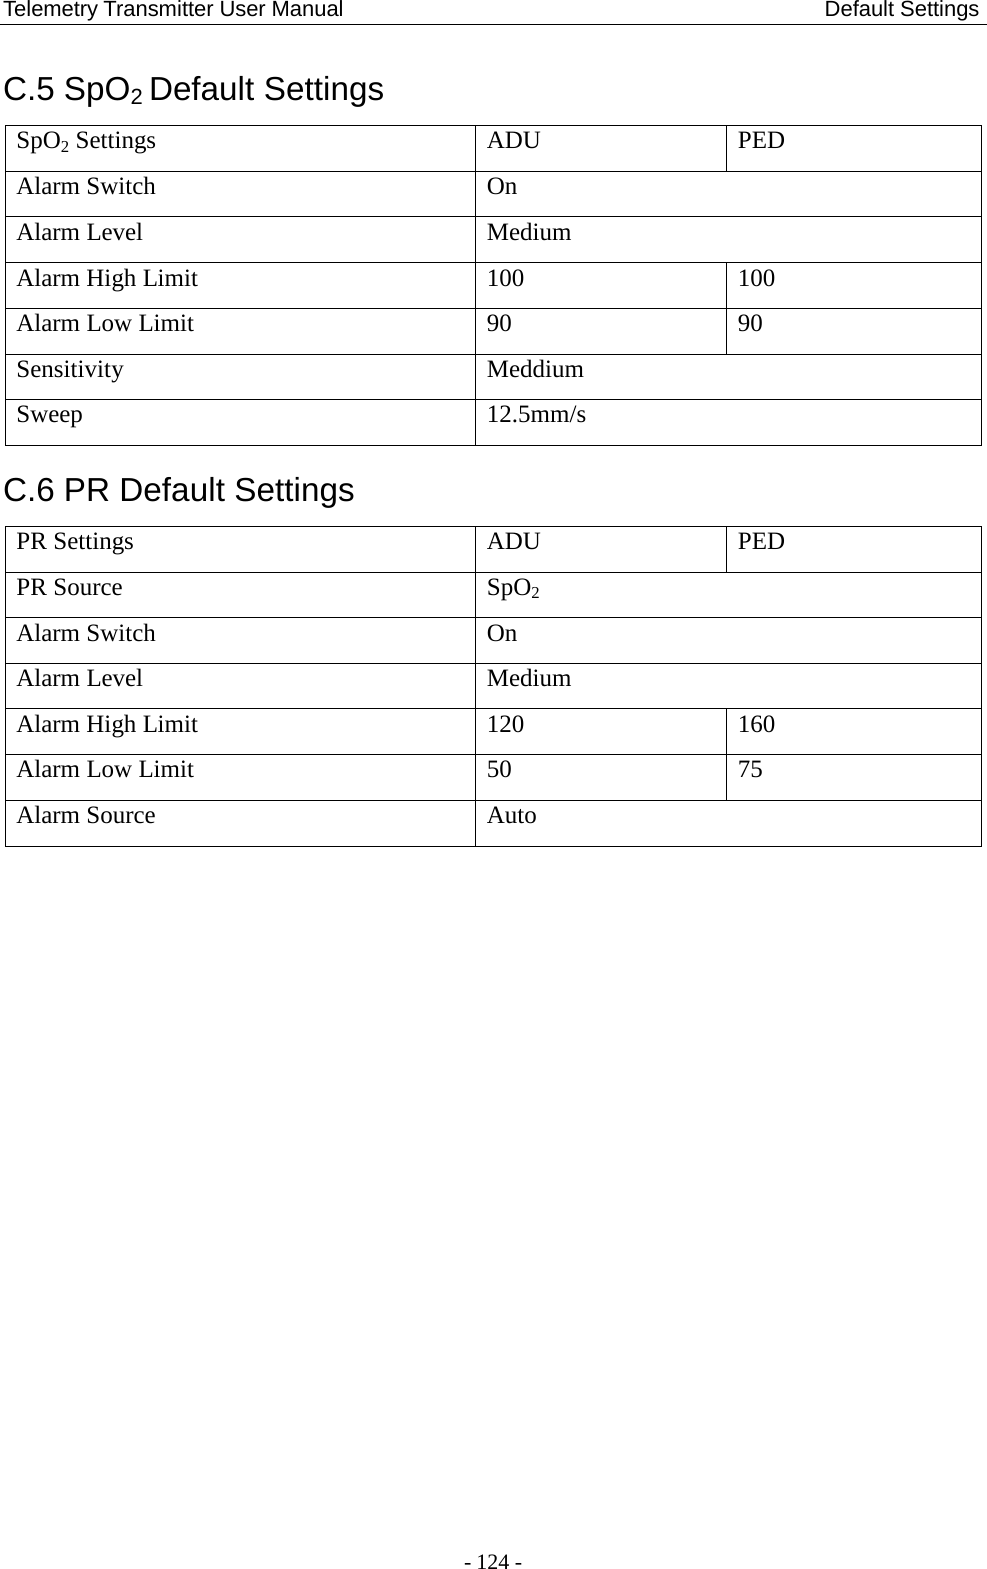 Telemetry Transmitter User Manual                                            Default Settings C.5 SpO2 Default Settings SpO2 Settings ADU PED Alarm Switch On Alarm Level Medium Alarm High Limit 100 100 Alarm Low Limit 90 90 Sensitivity Meddium Sweep 12.5mm/s C.6 PR Default Settings PR Settings ADU PED PR Source SpO2 Alarm Switch On Alarm Level Medium Alarm High Limit 120 160 Alarm Low Limit 50 75 Alarm Source Auto - 124 - 